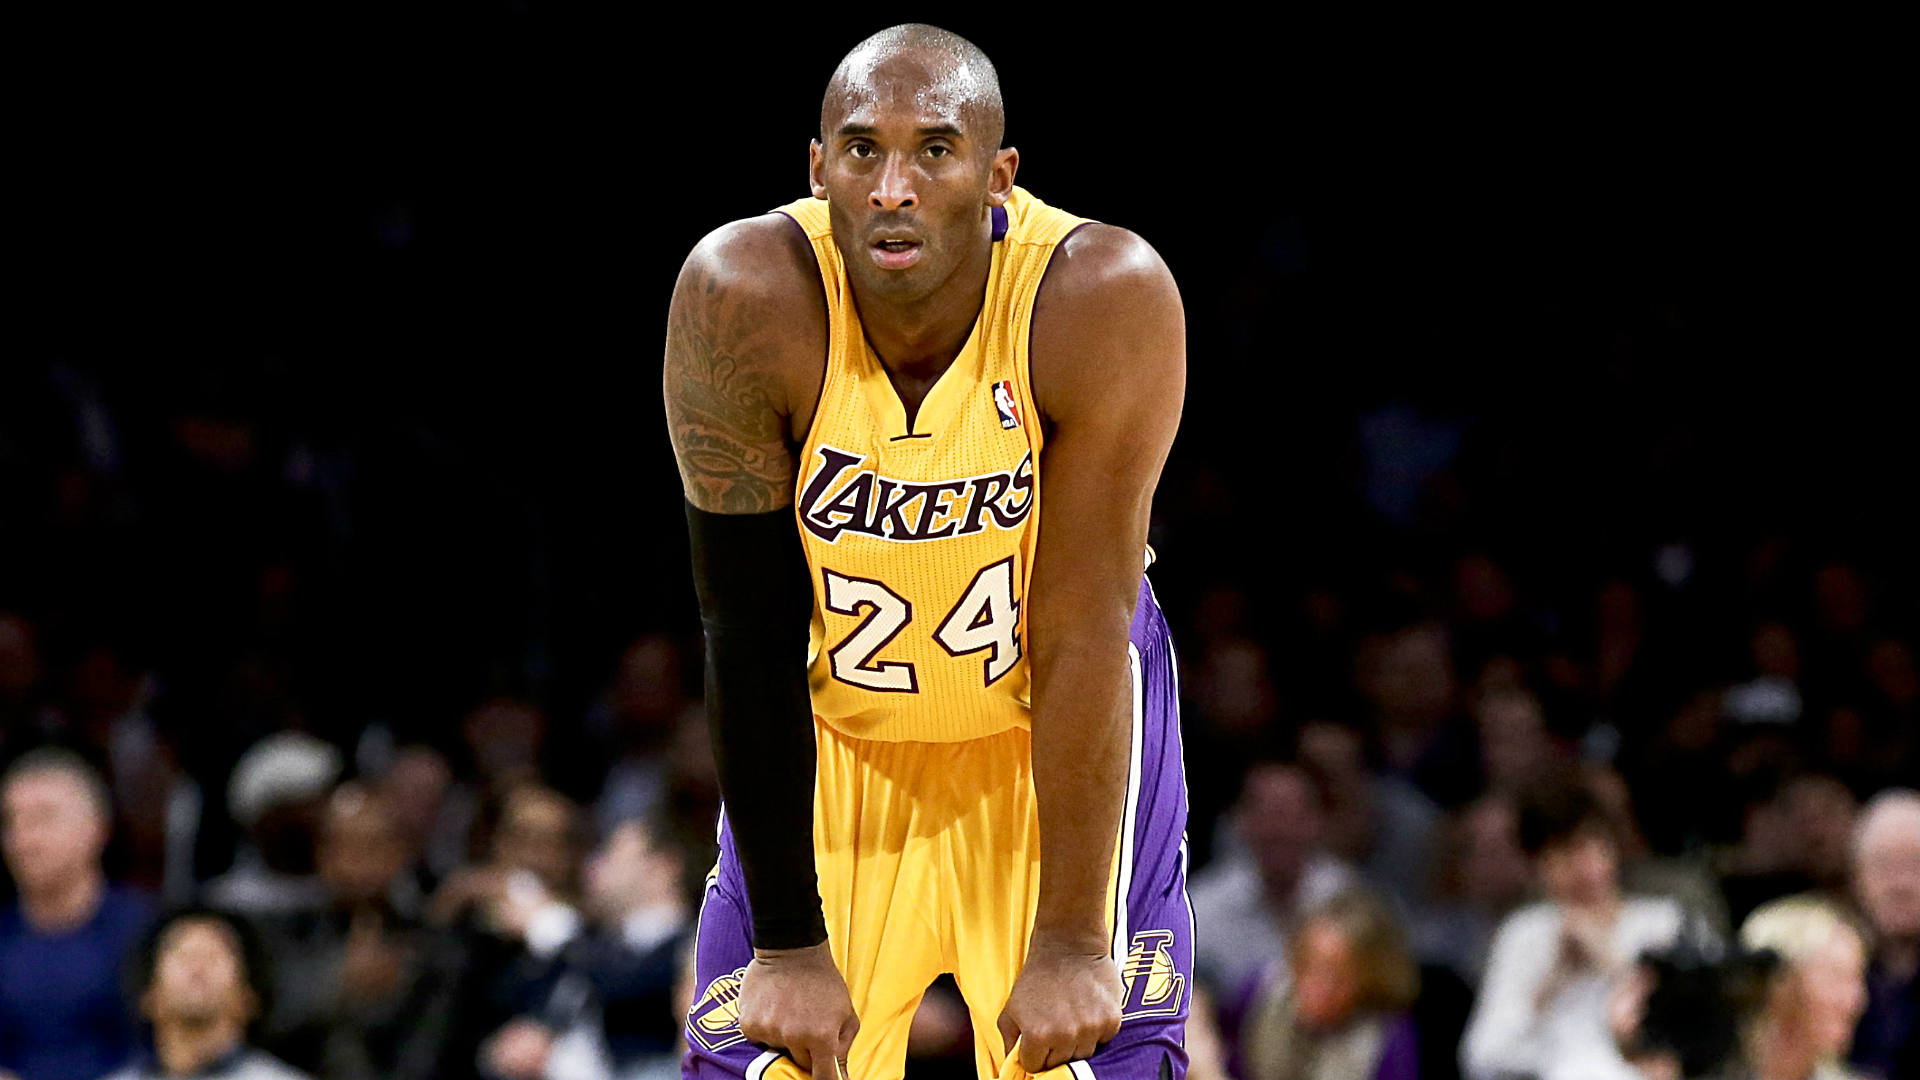 SN sources: Kobe Bryant wants new Lakers coach next year | NBA ...